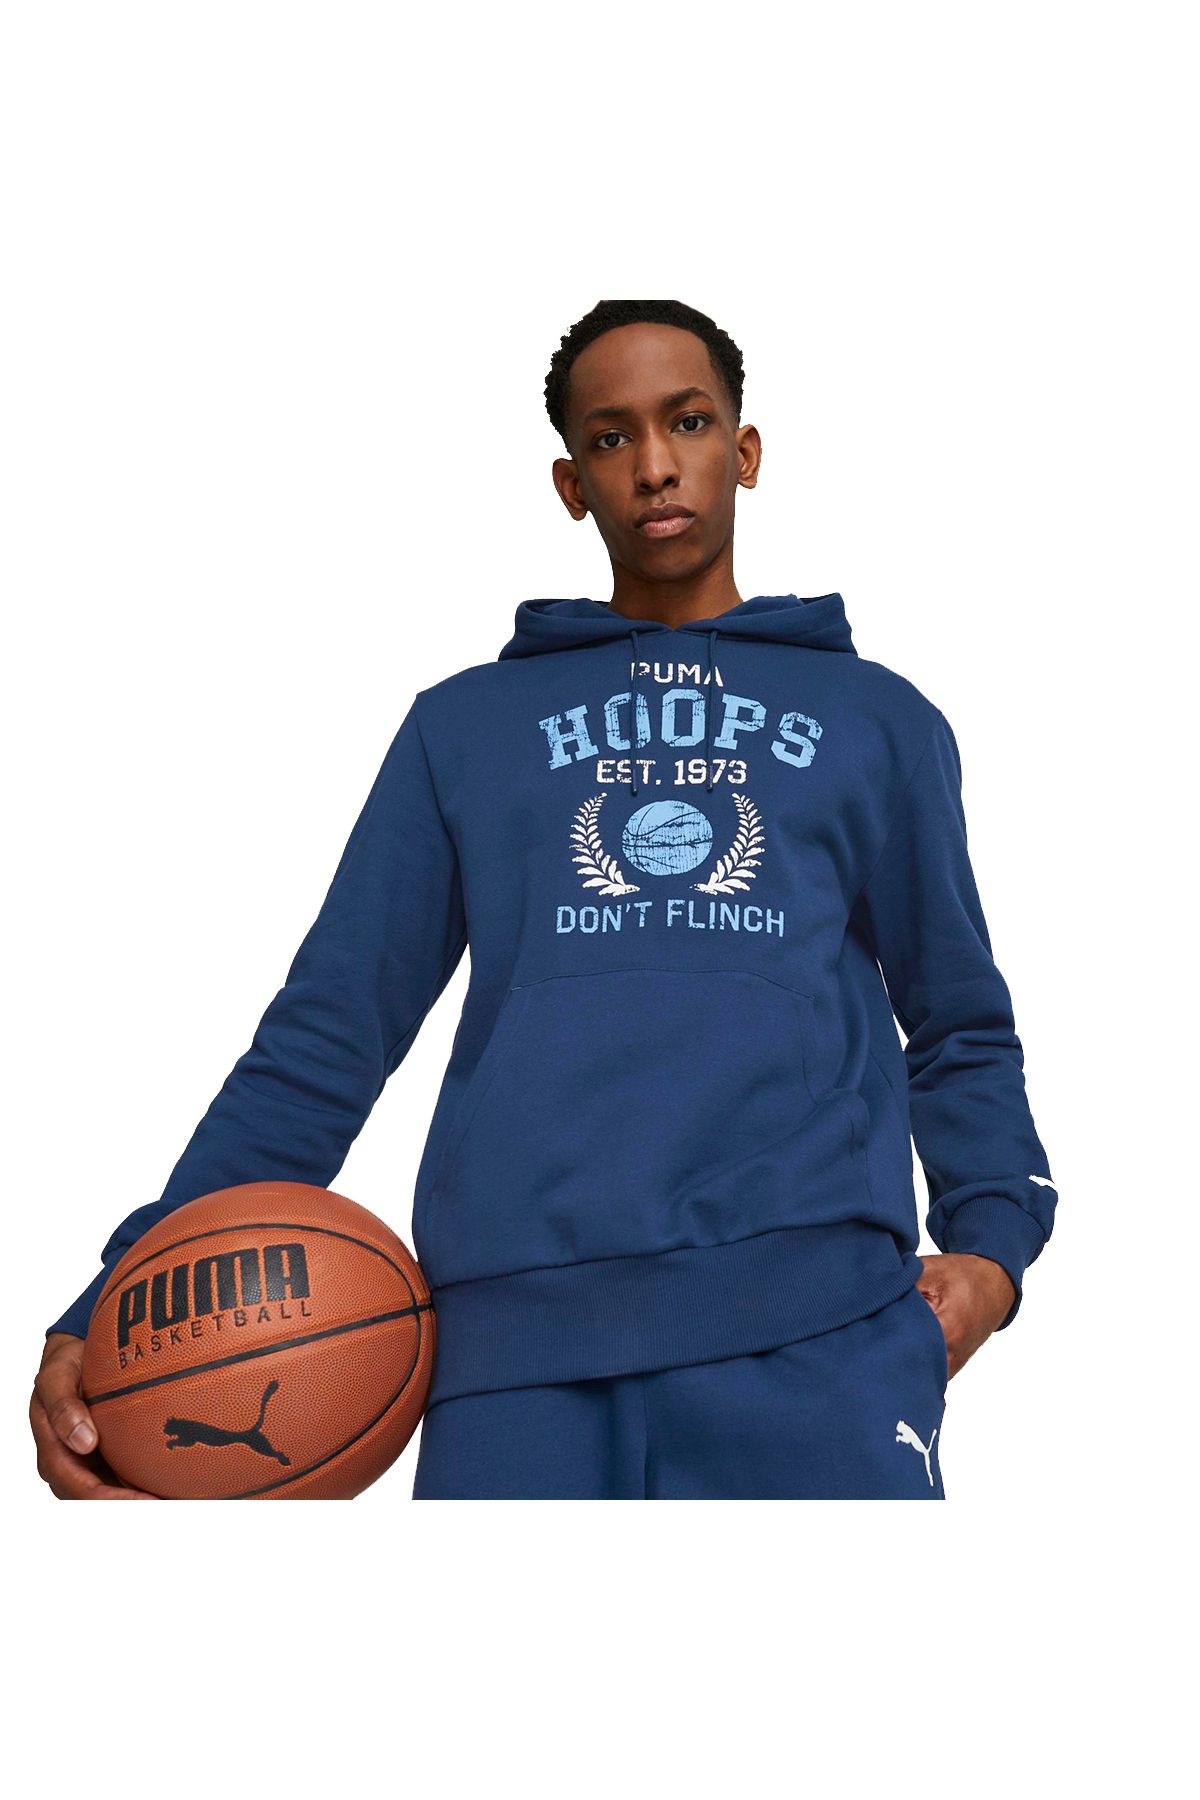 Puma Blueprint Graphic Erkek Lacivert Basketbol Sweatshirt 62208301